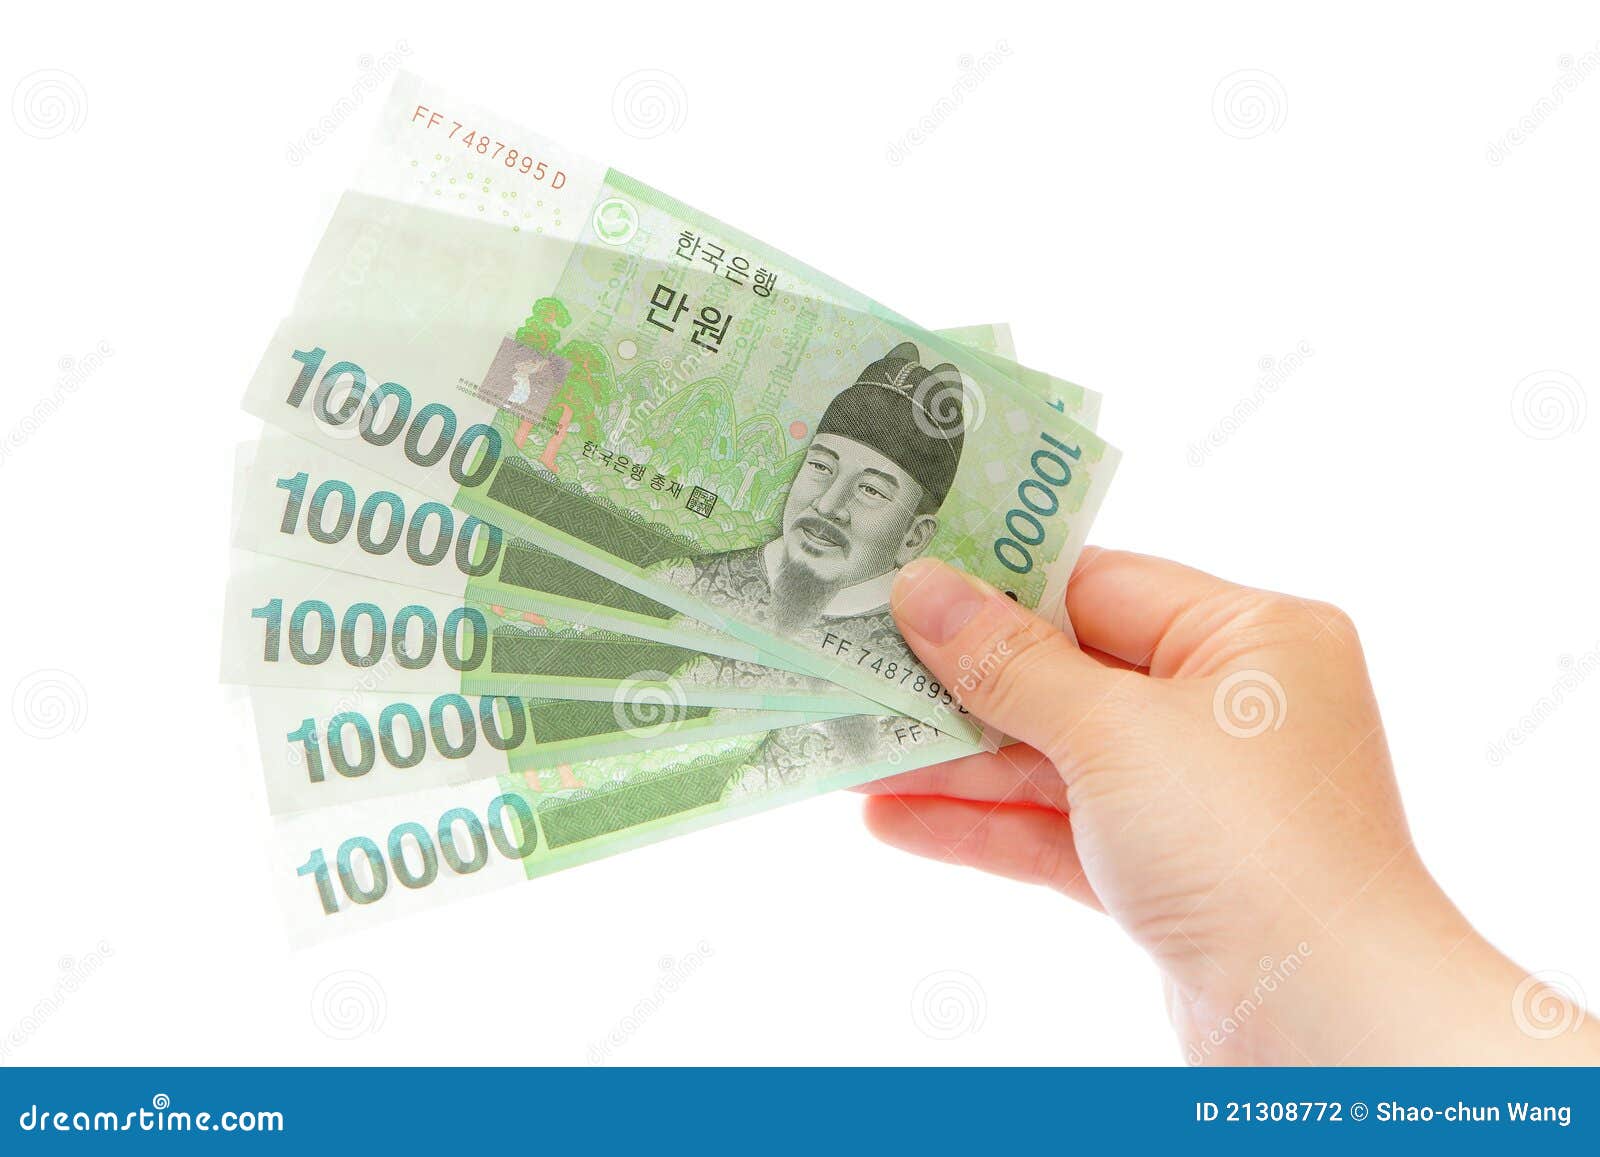 korea money won and hand